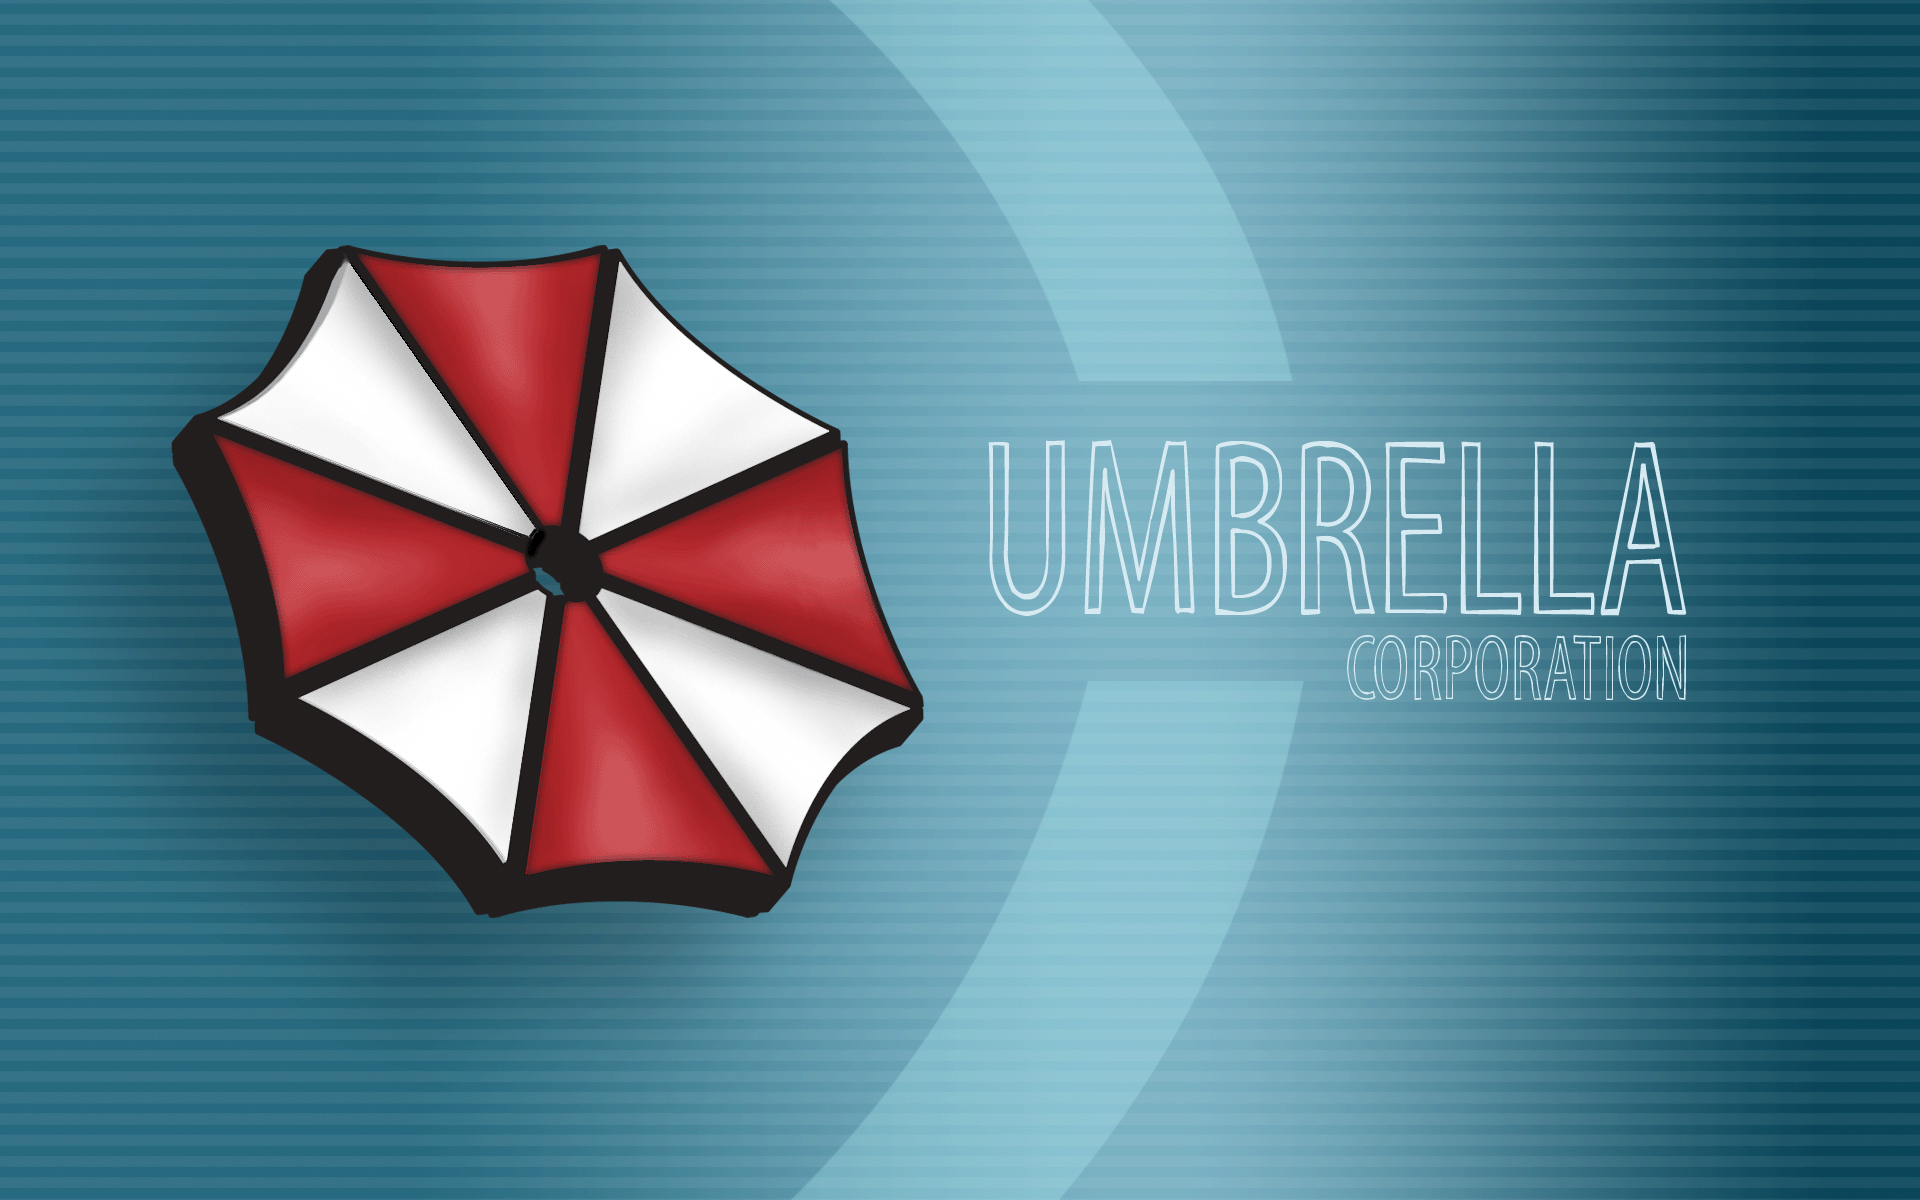 Umbrella_Corp_Wallpaper_by_Meatloaf_xp_1.jpg